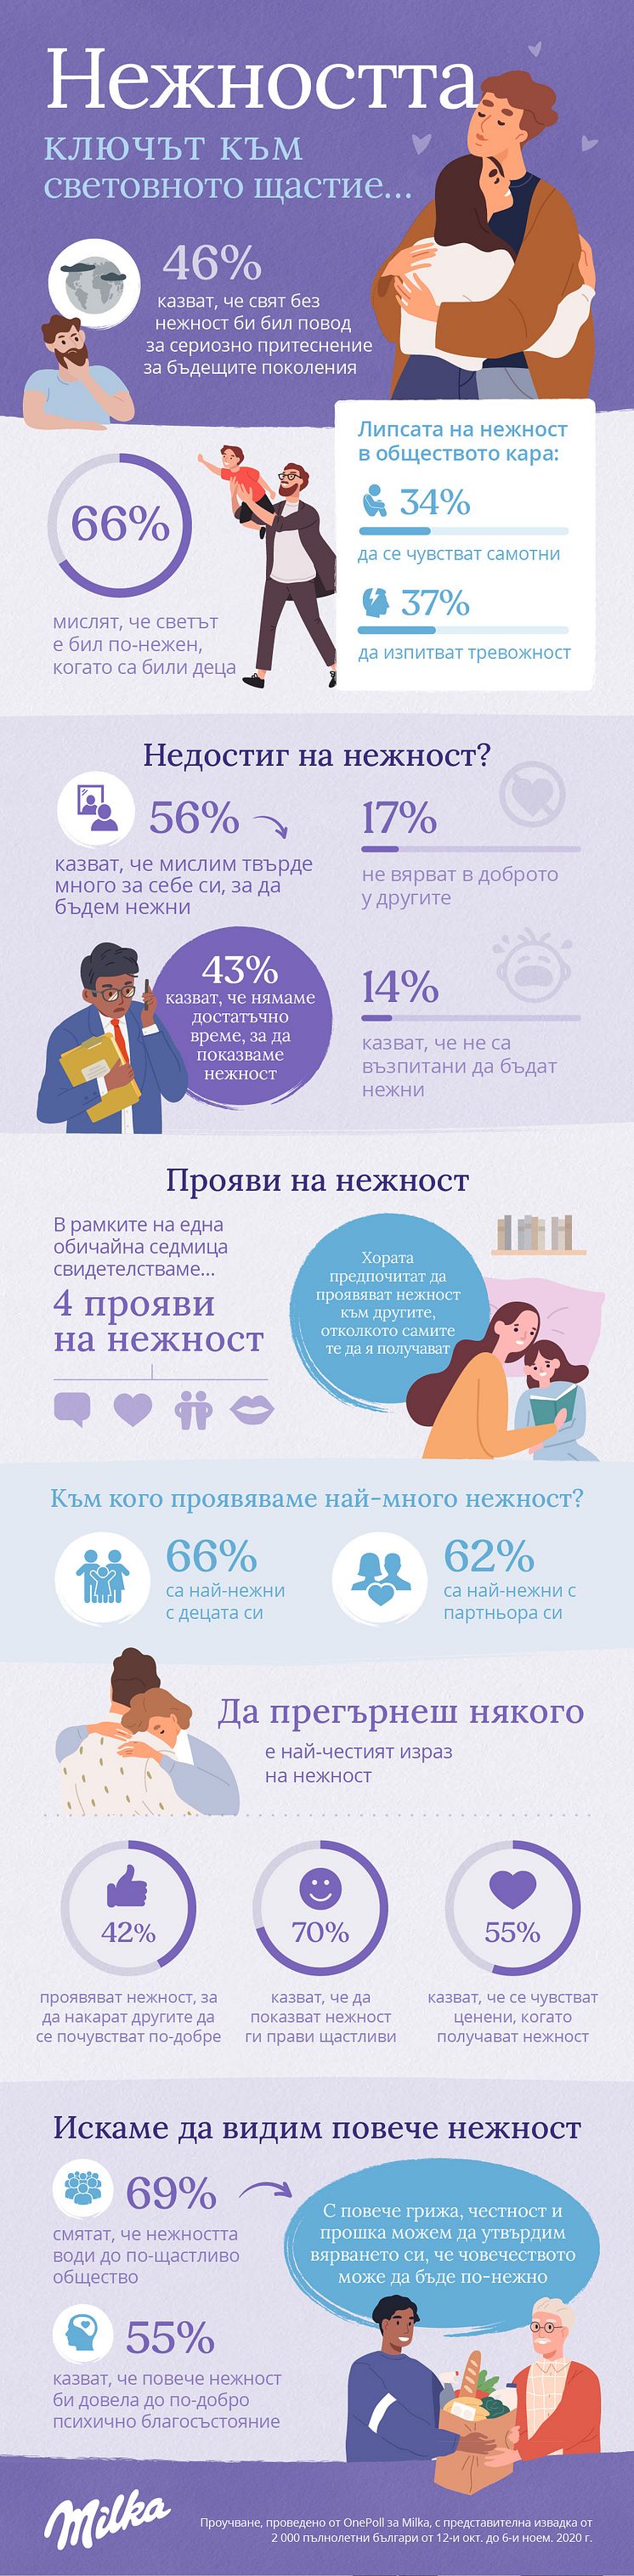 Milka Tenderness Infographic [Bulgaria]